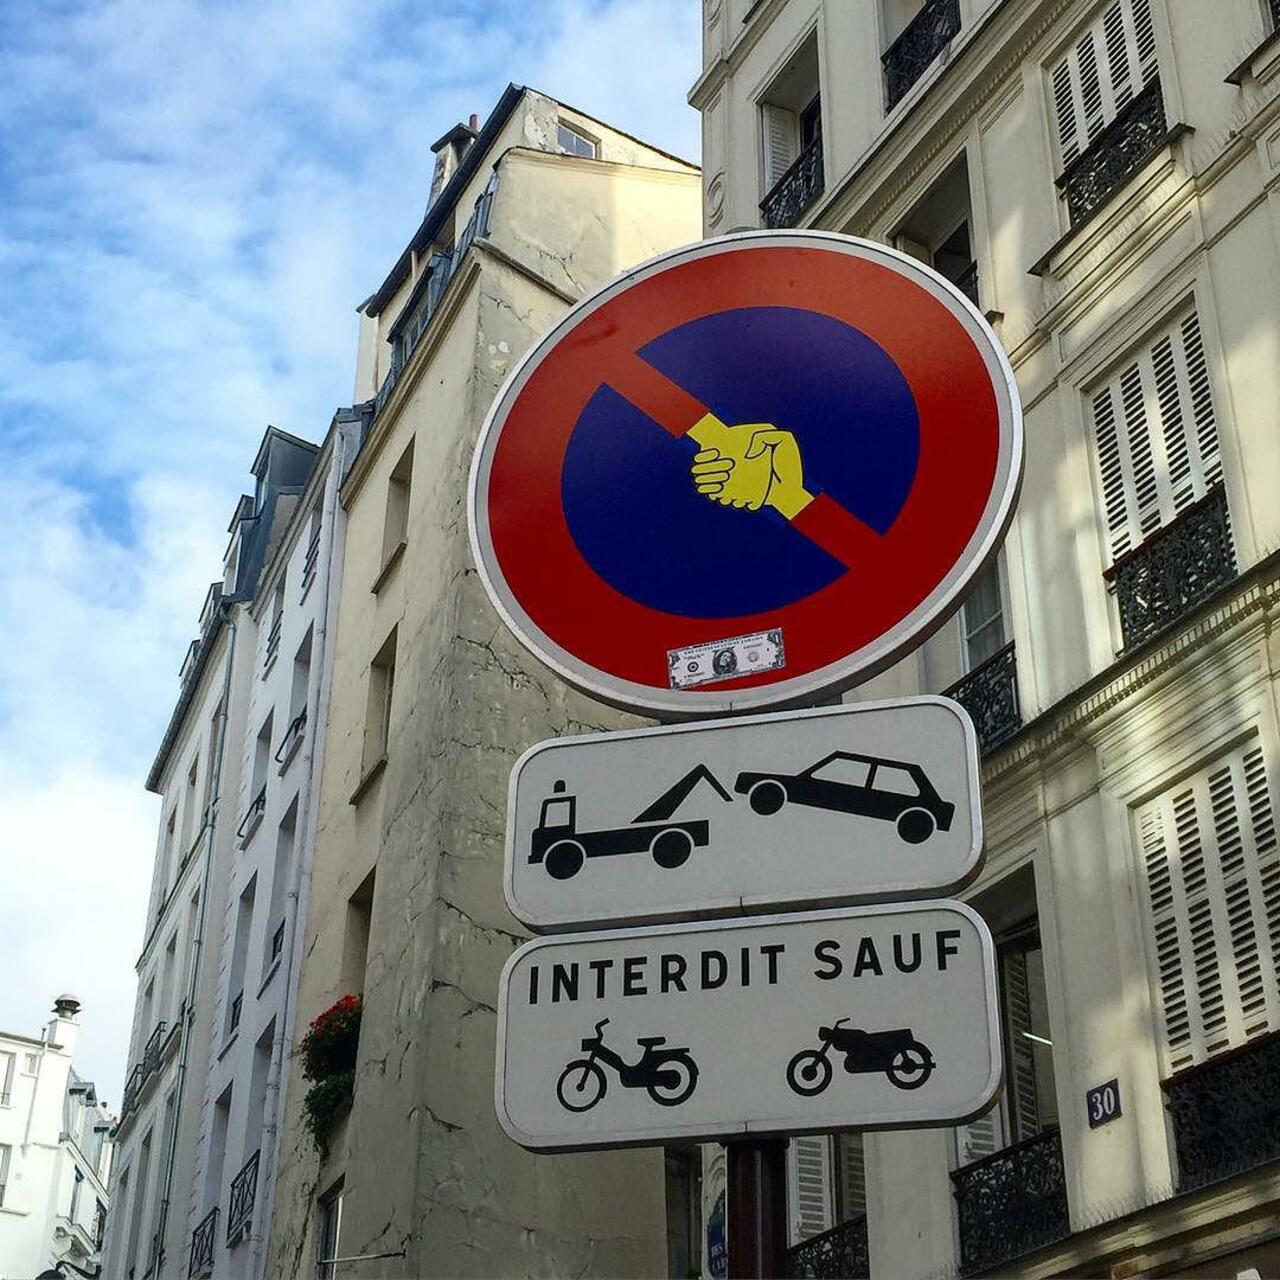 #Paris #graffiti photo by @hookedblog http://ift.tt/1KZVSan #StreetArt http://t.co/6Q84SzUG6Q